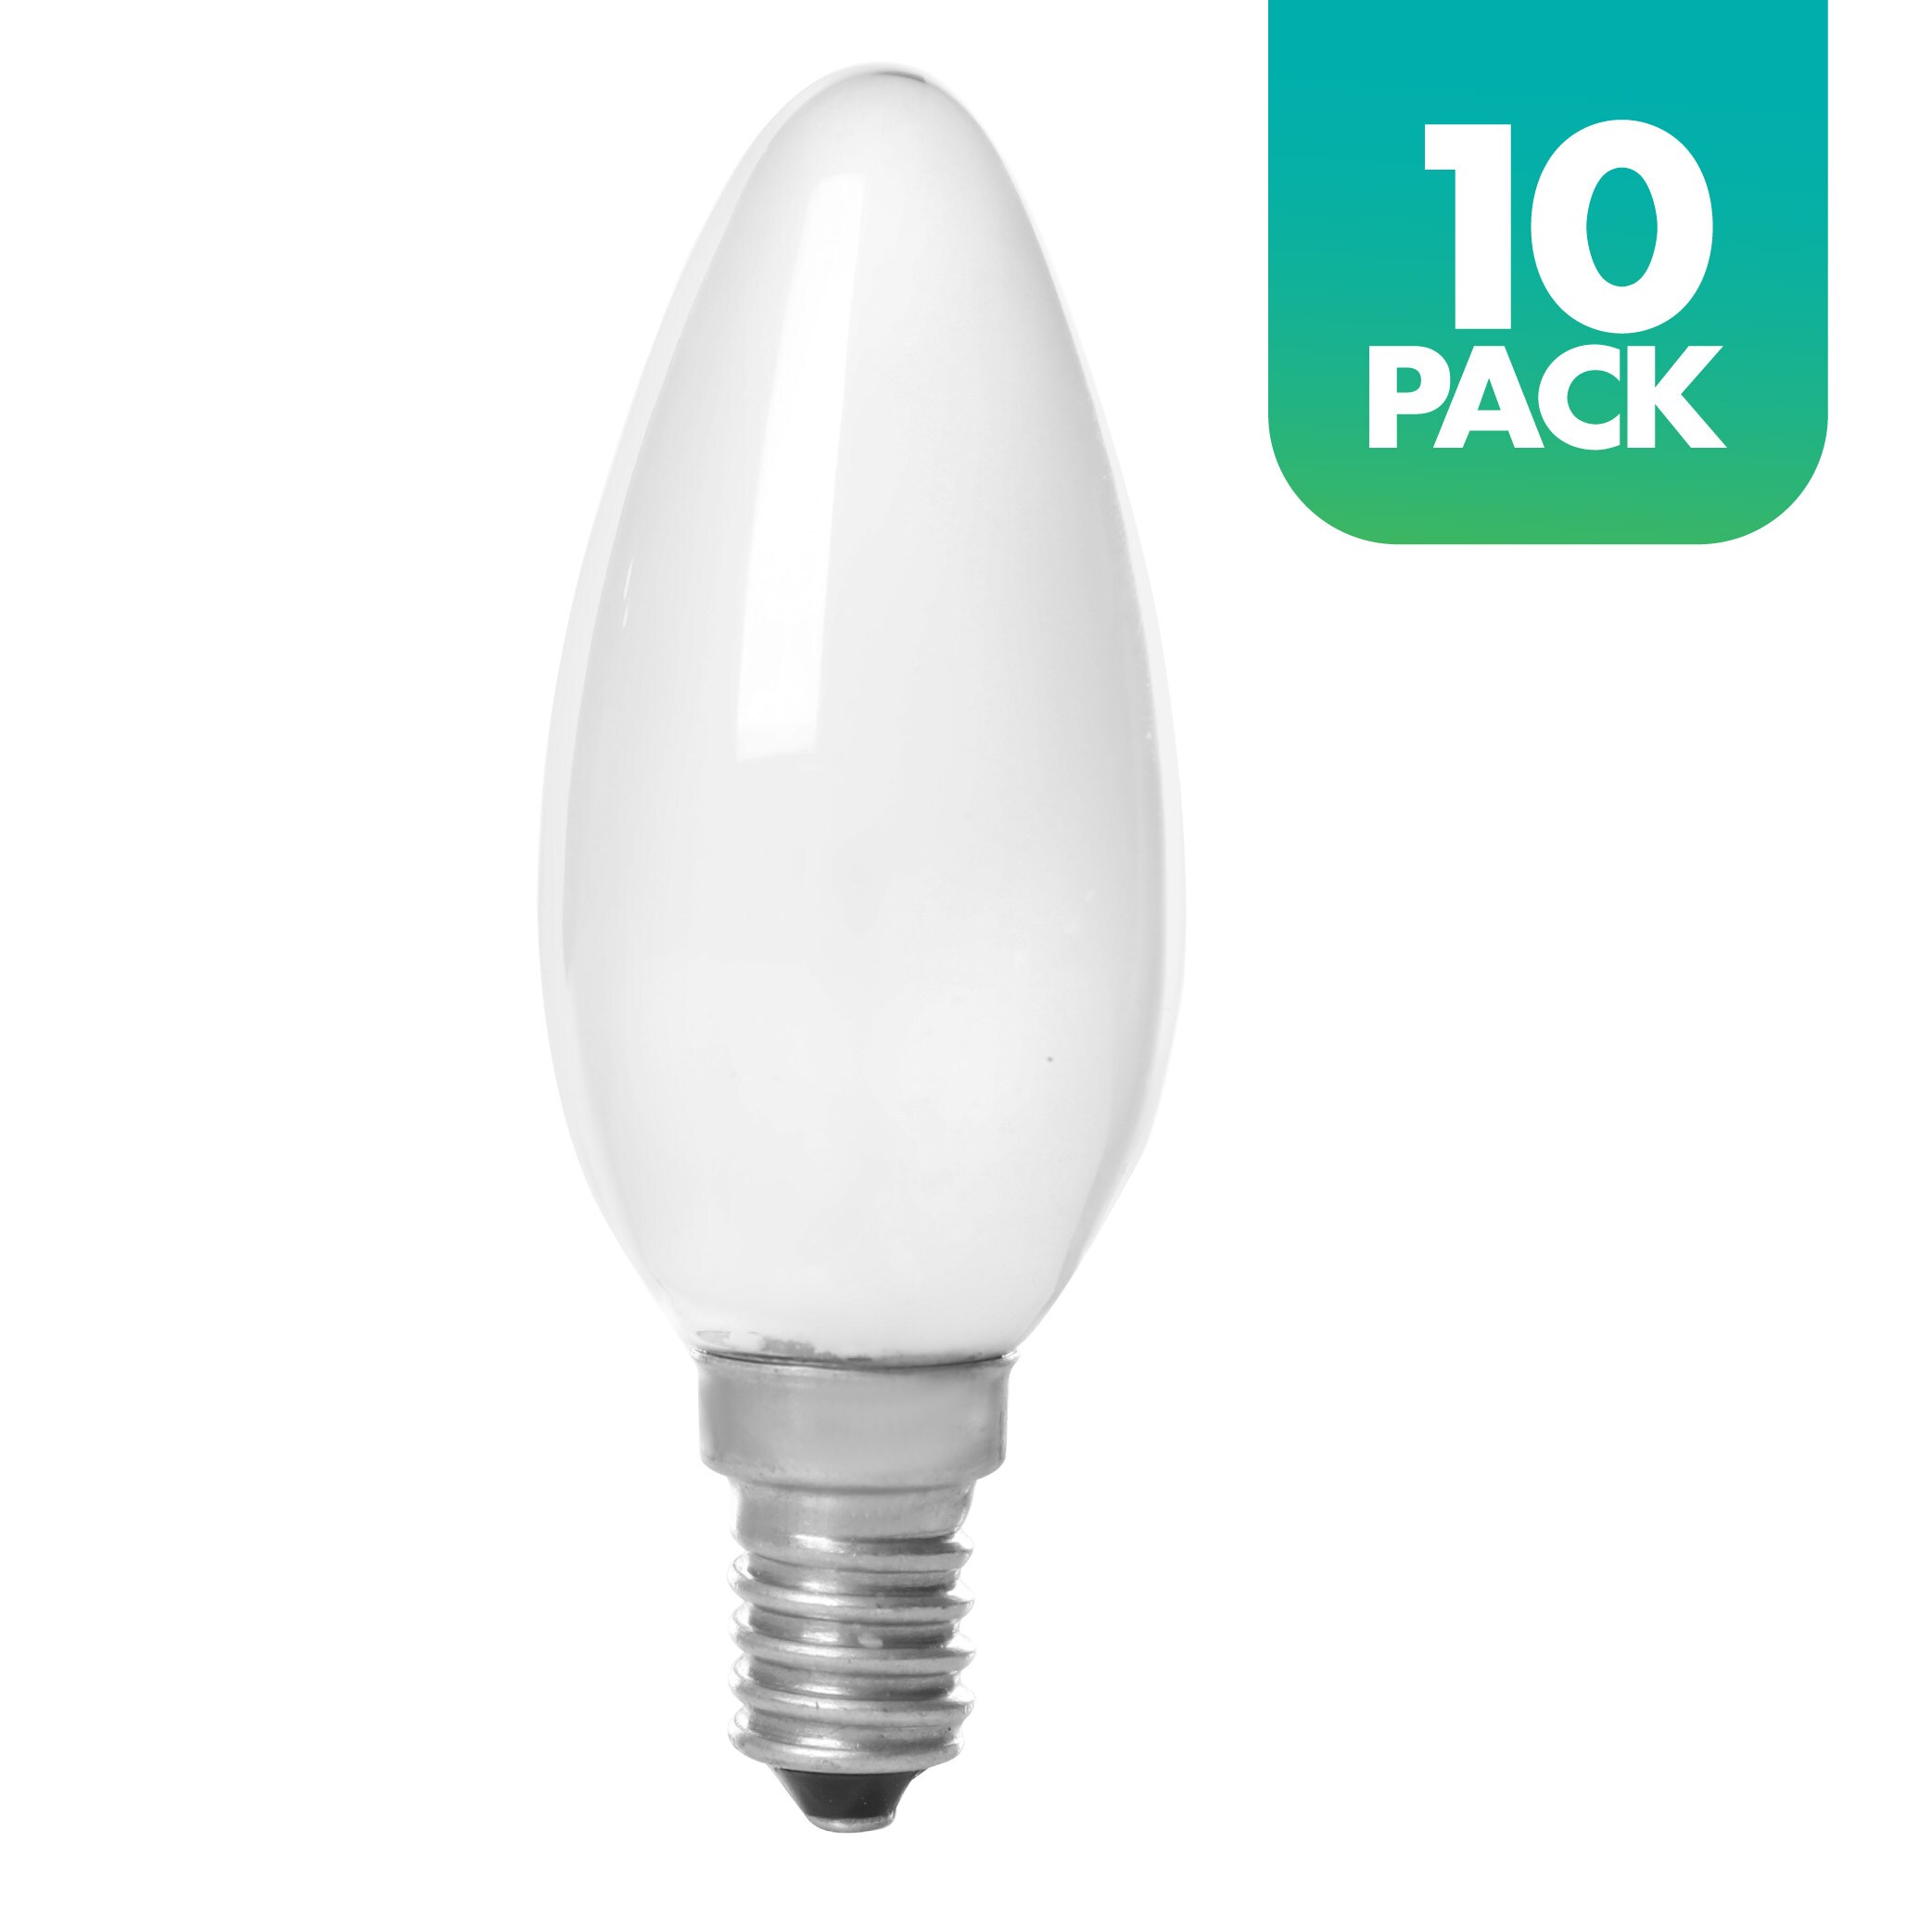 hansang GU10 LED Bulbs Warm White(3000K),LED 6 Watt Equivalent 50W